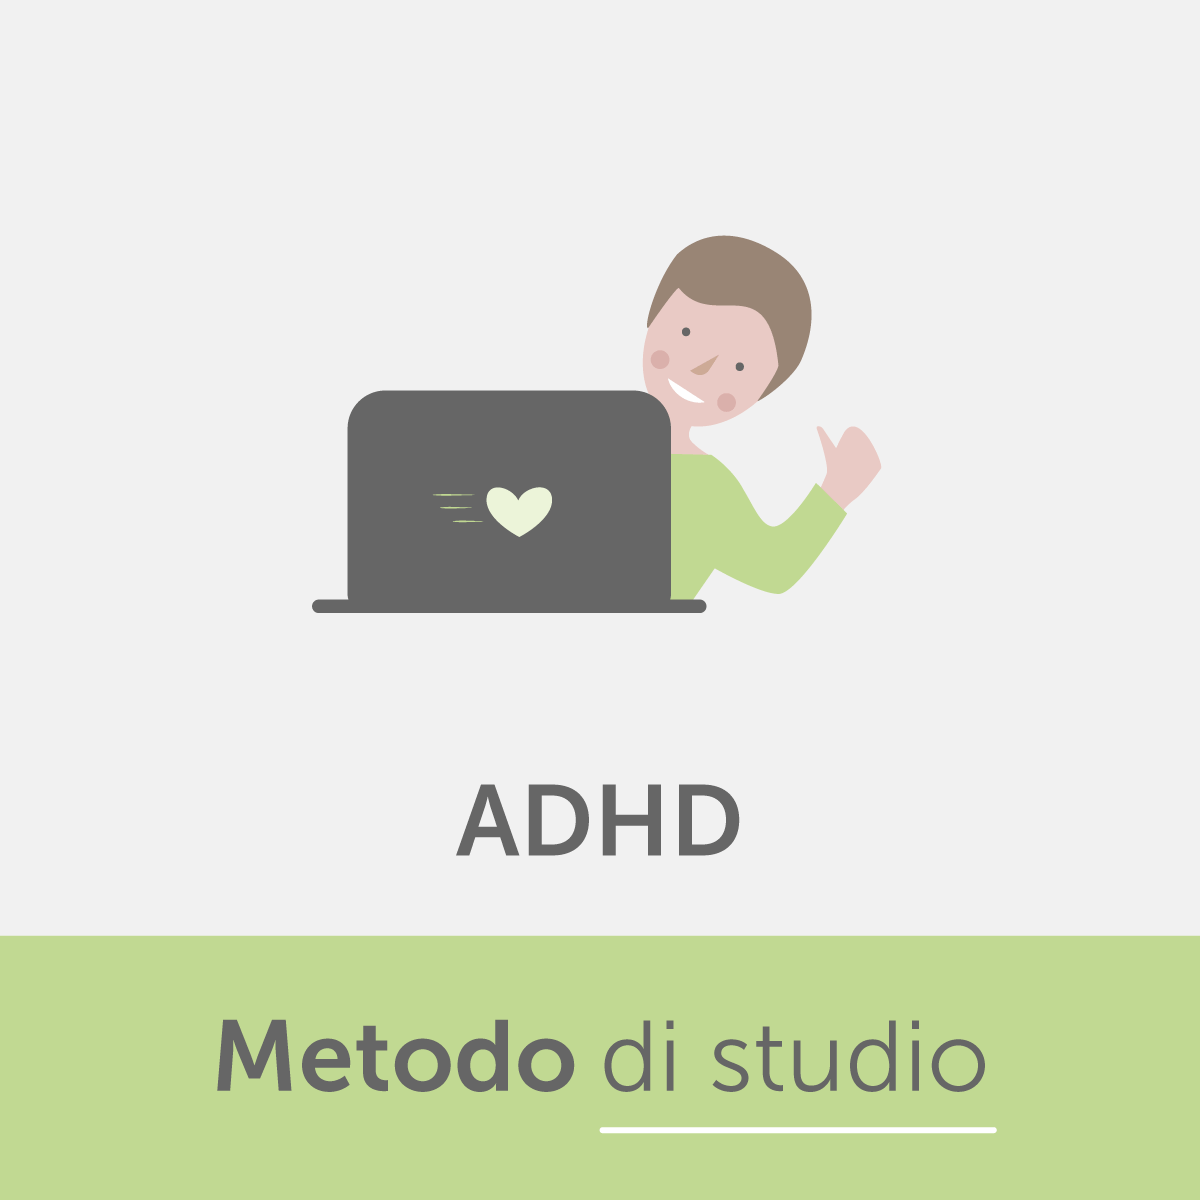 Metodo di studio per studenti - ADHD